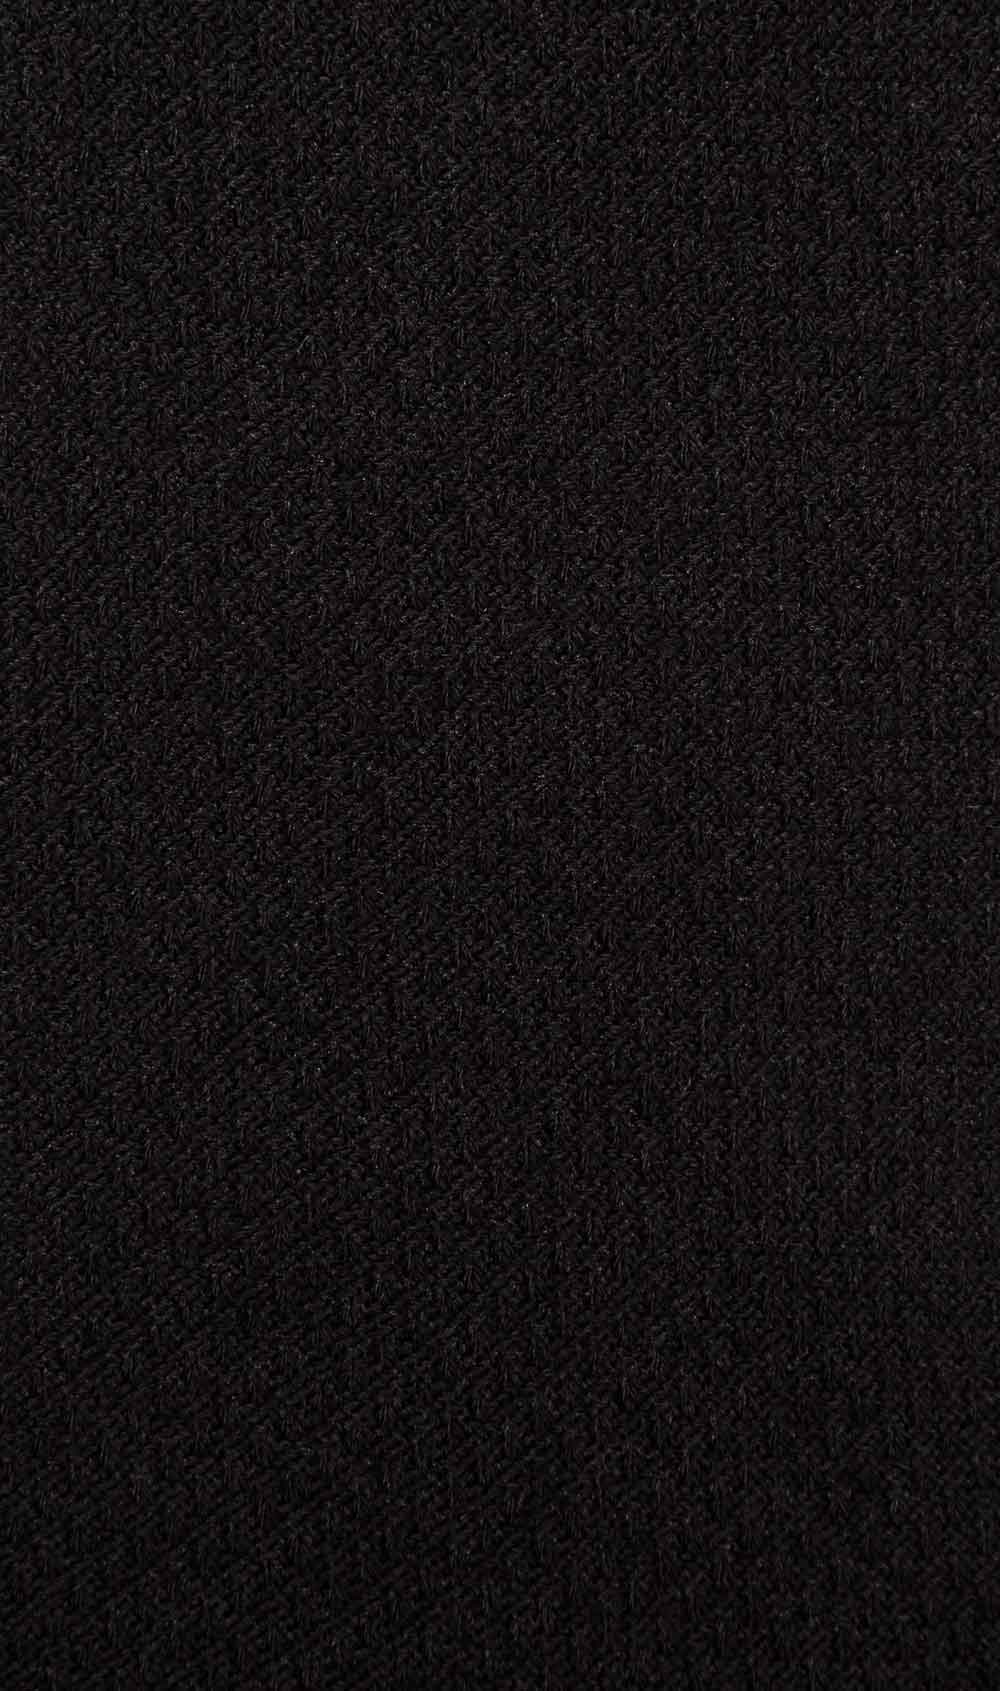 Black Textured Cotton-Blend Socks Fabricv